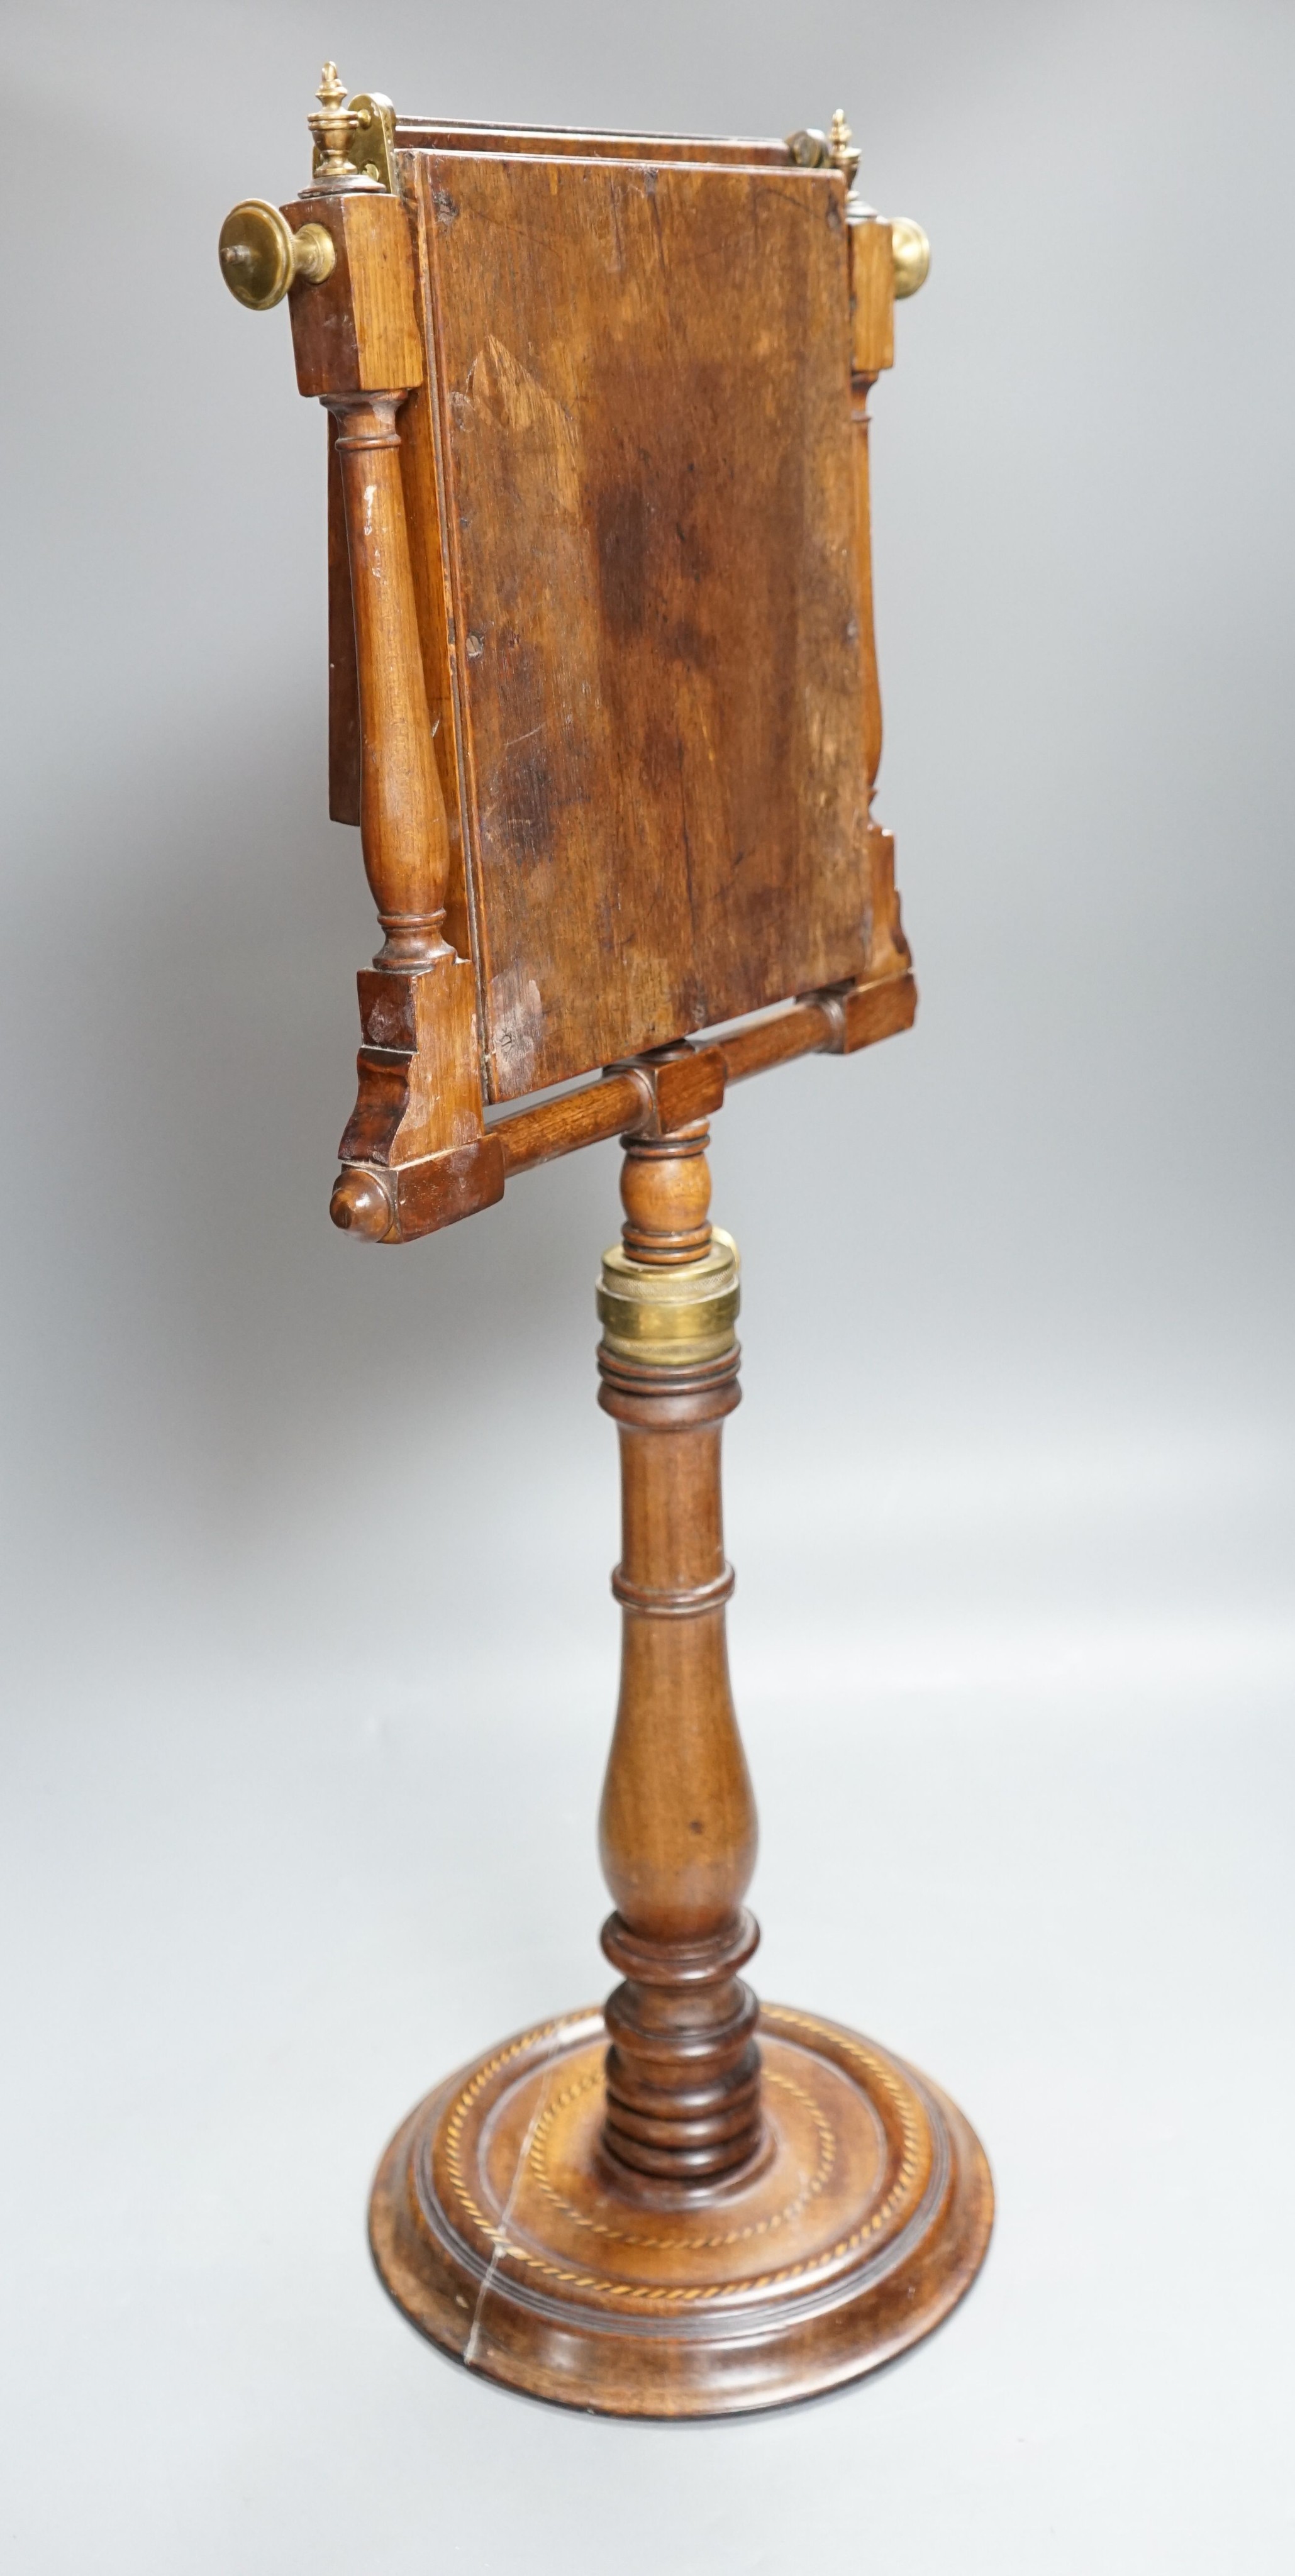 A George III inlaid mahogany zograscope, 62cm